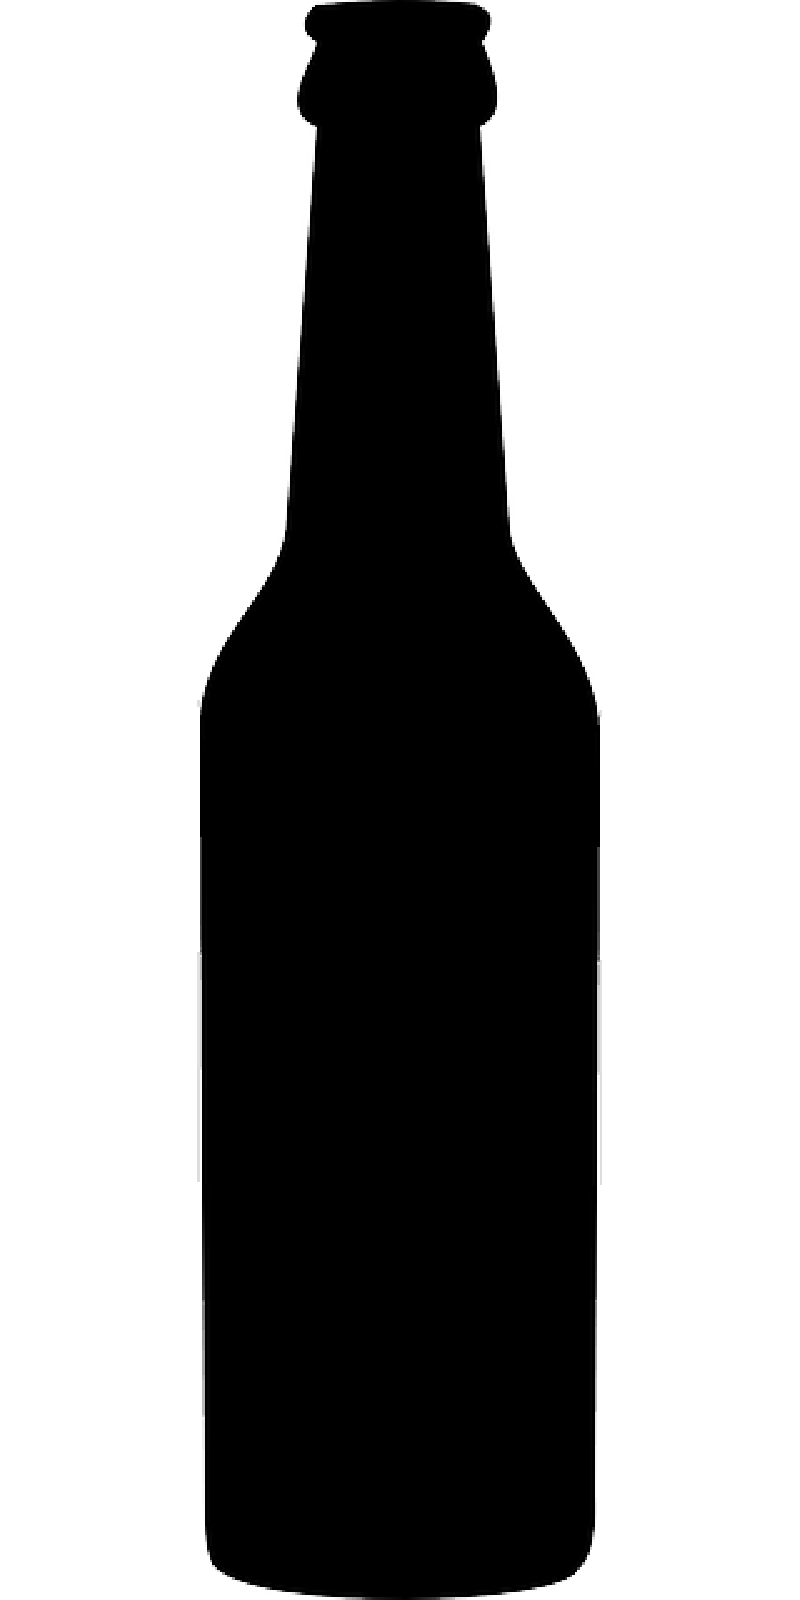 Long Neck Bottle (silhouette)